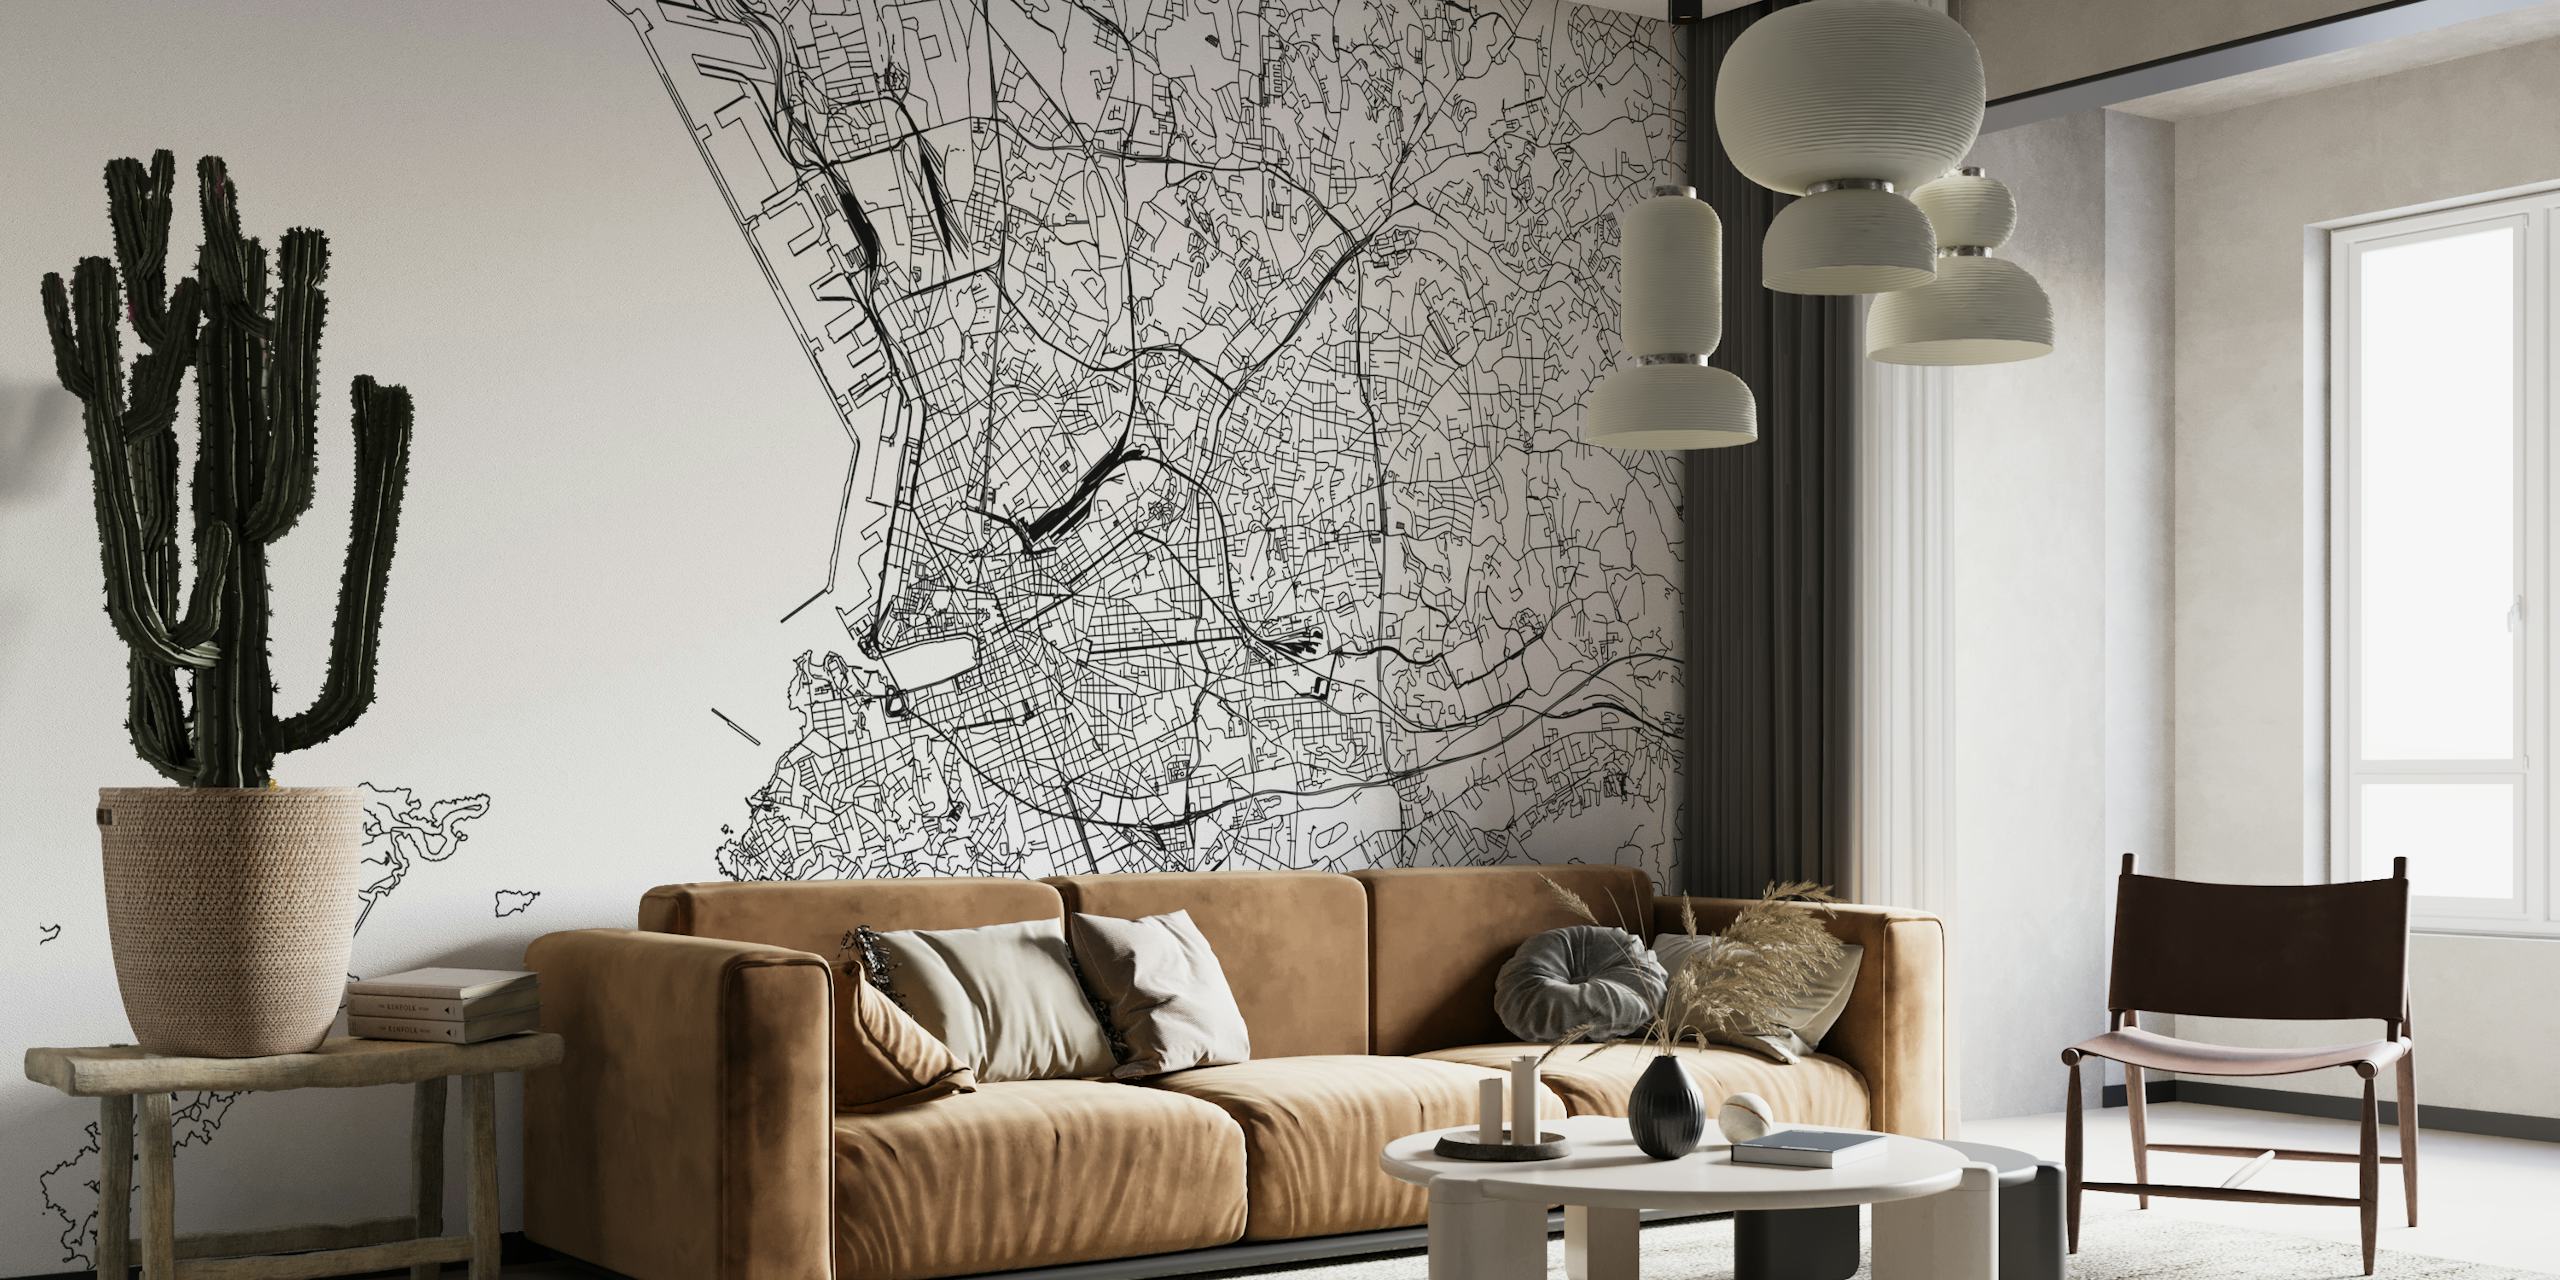 Černobílá detailní mapa Marseille fototapeta pro výzdobu interiéru.